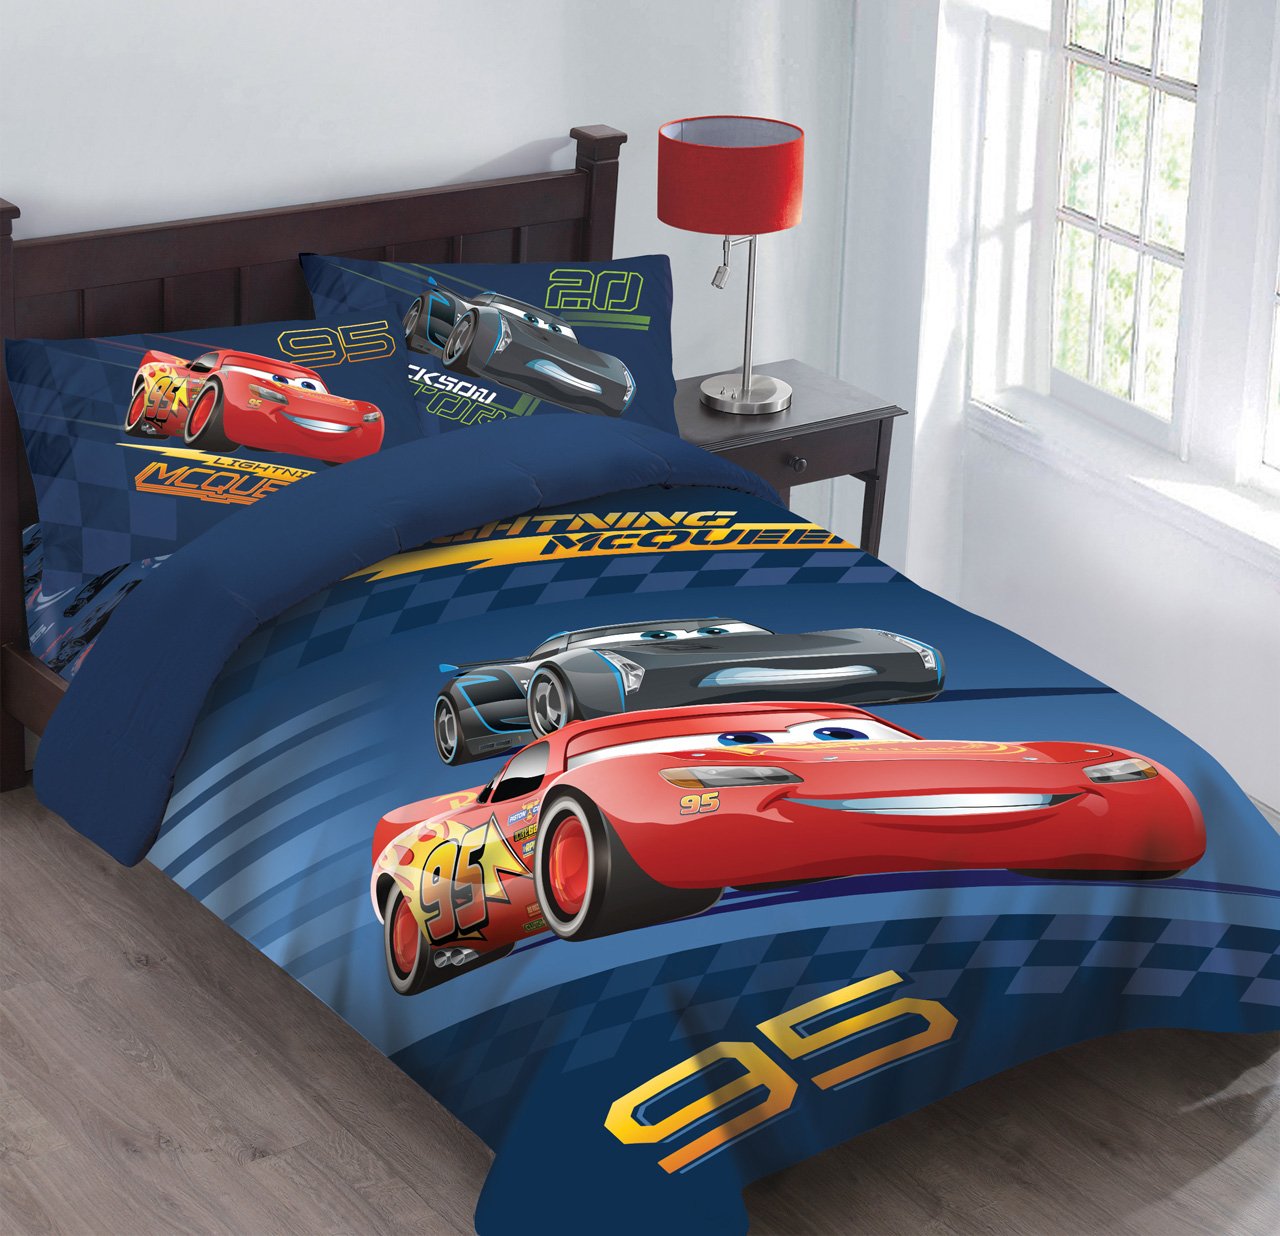 Kids bedding set example with Disney Cars theme